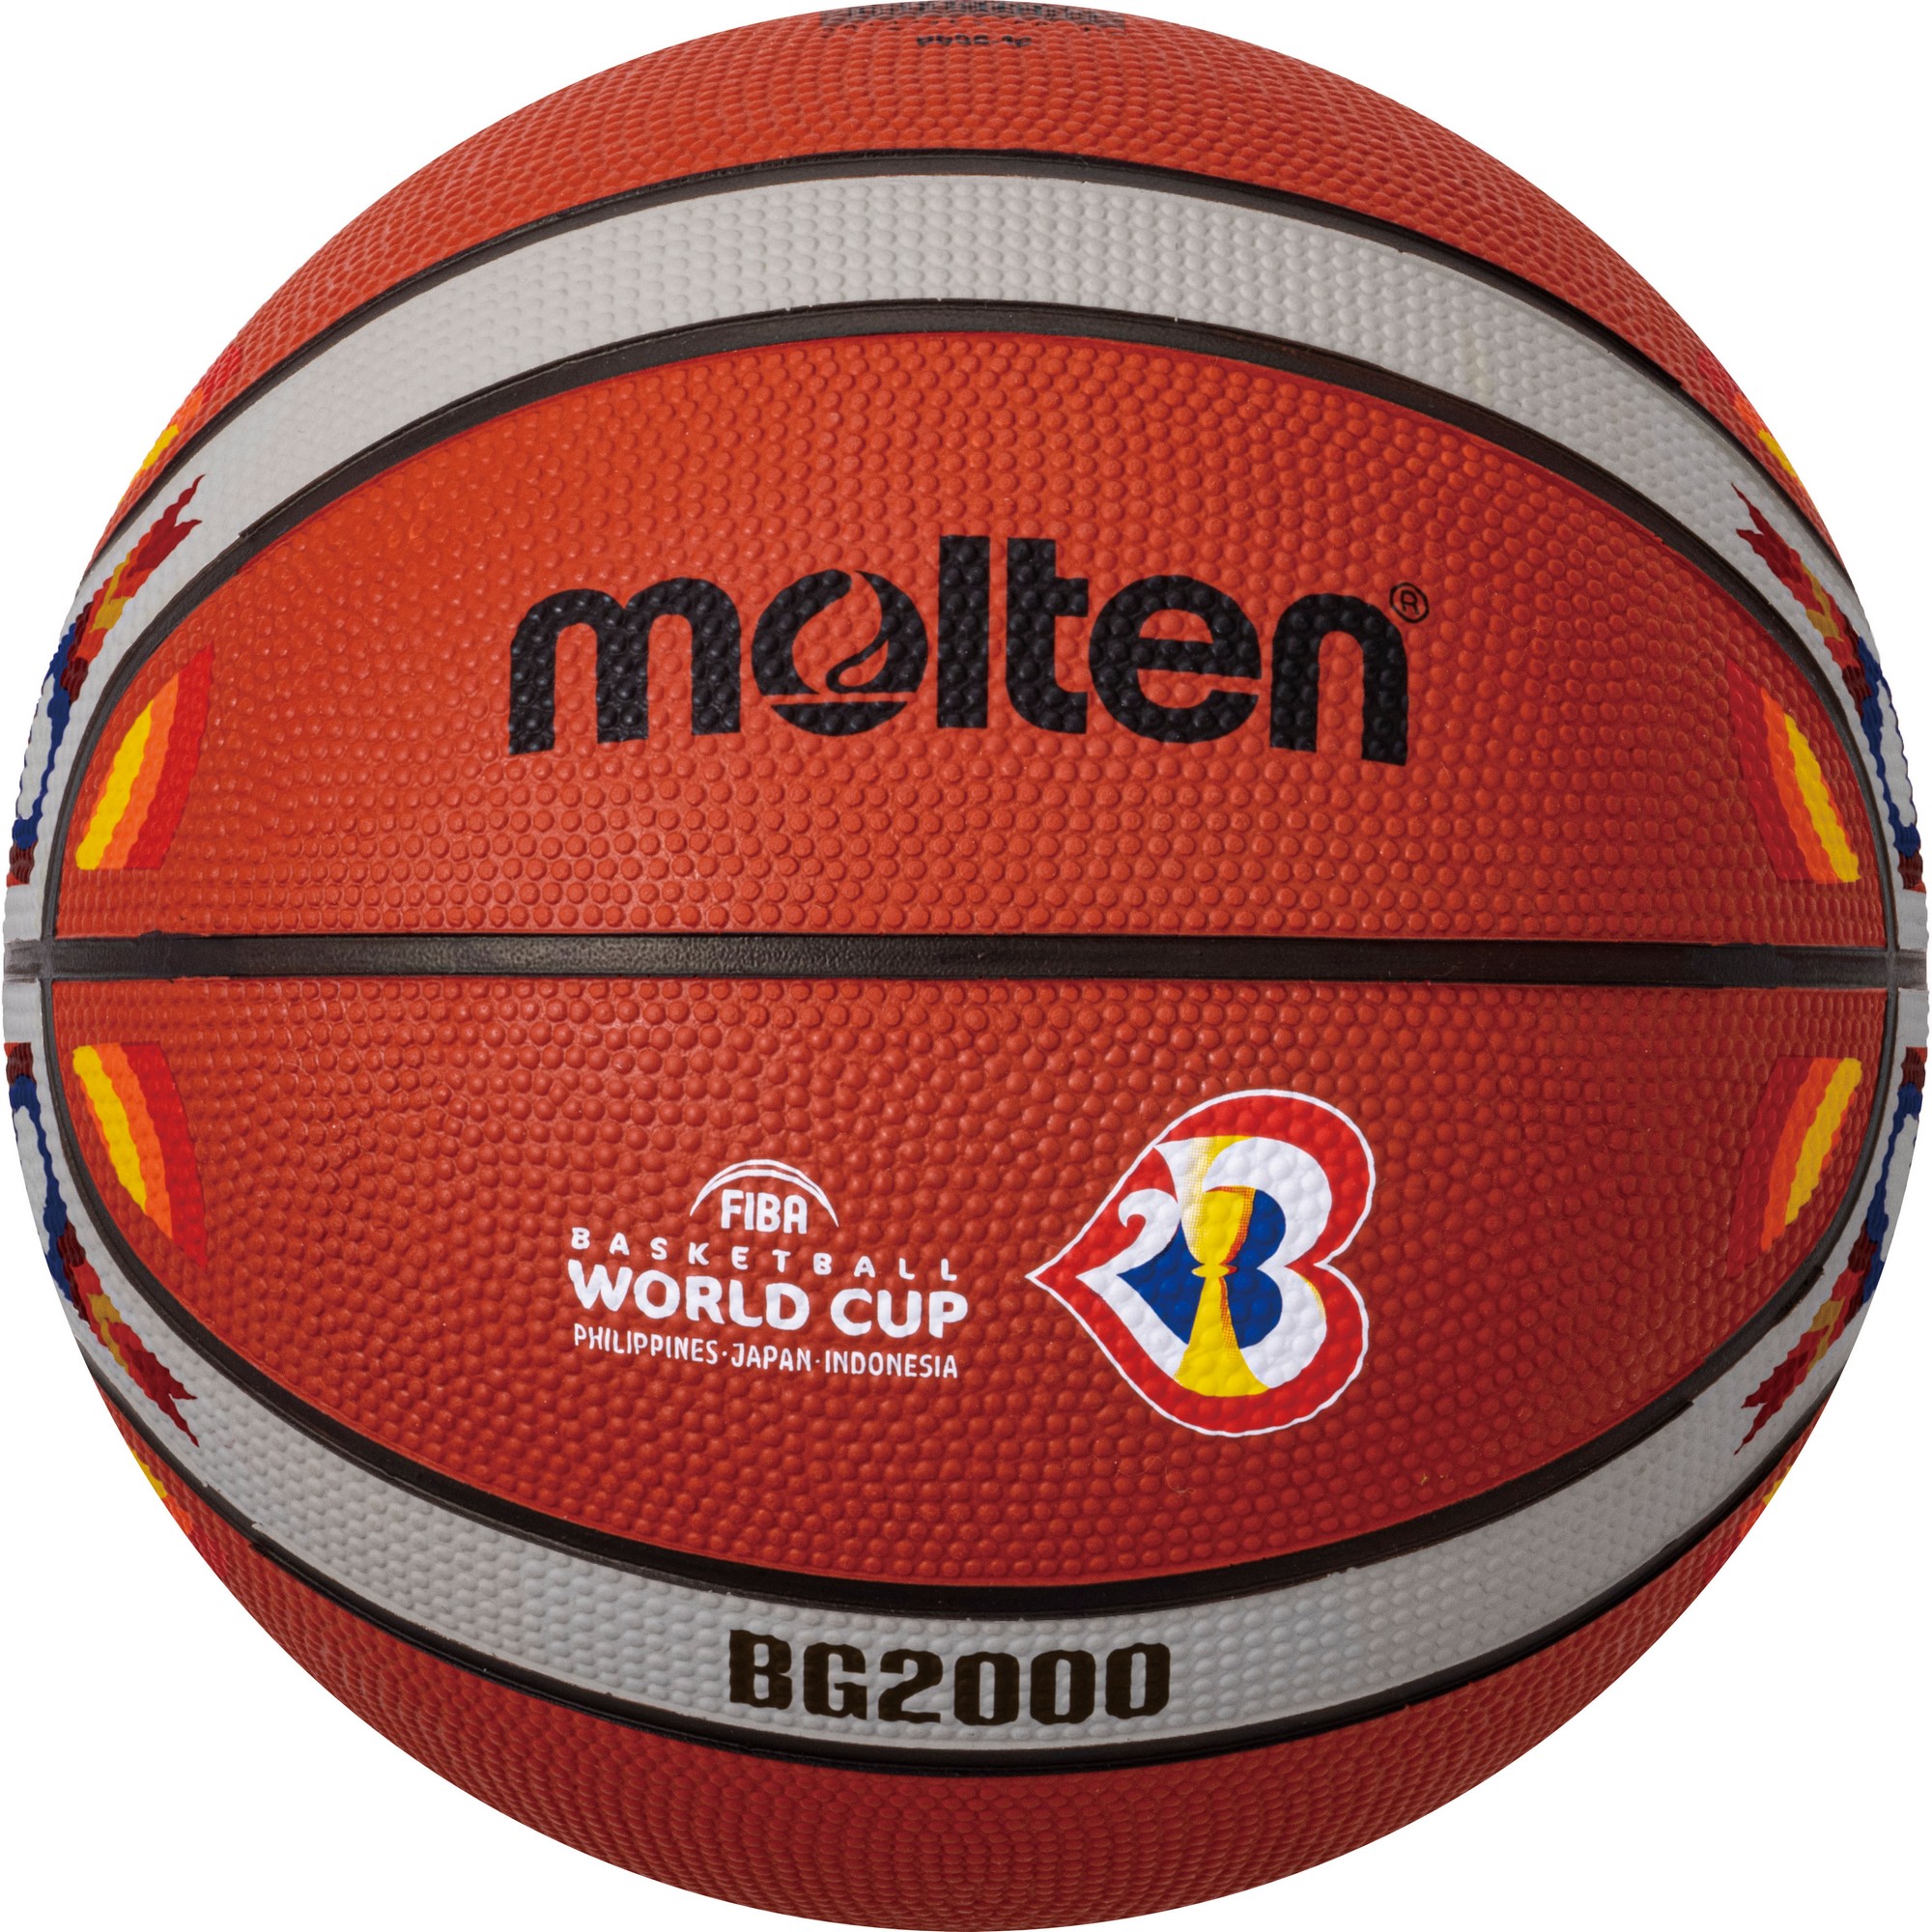   Molten FIBA Appr Level II B7G2000-M3P .7